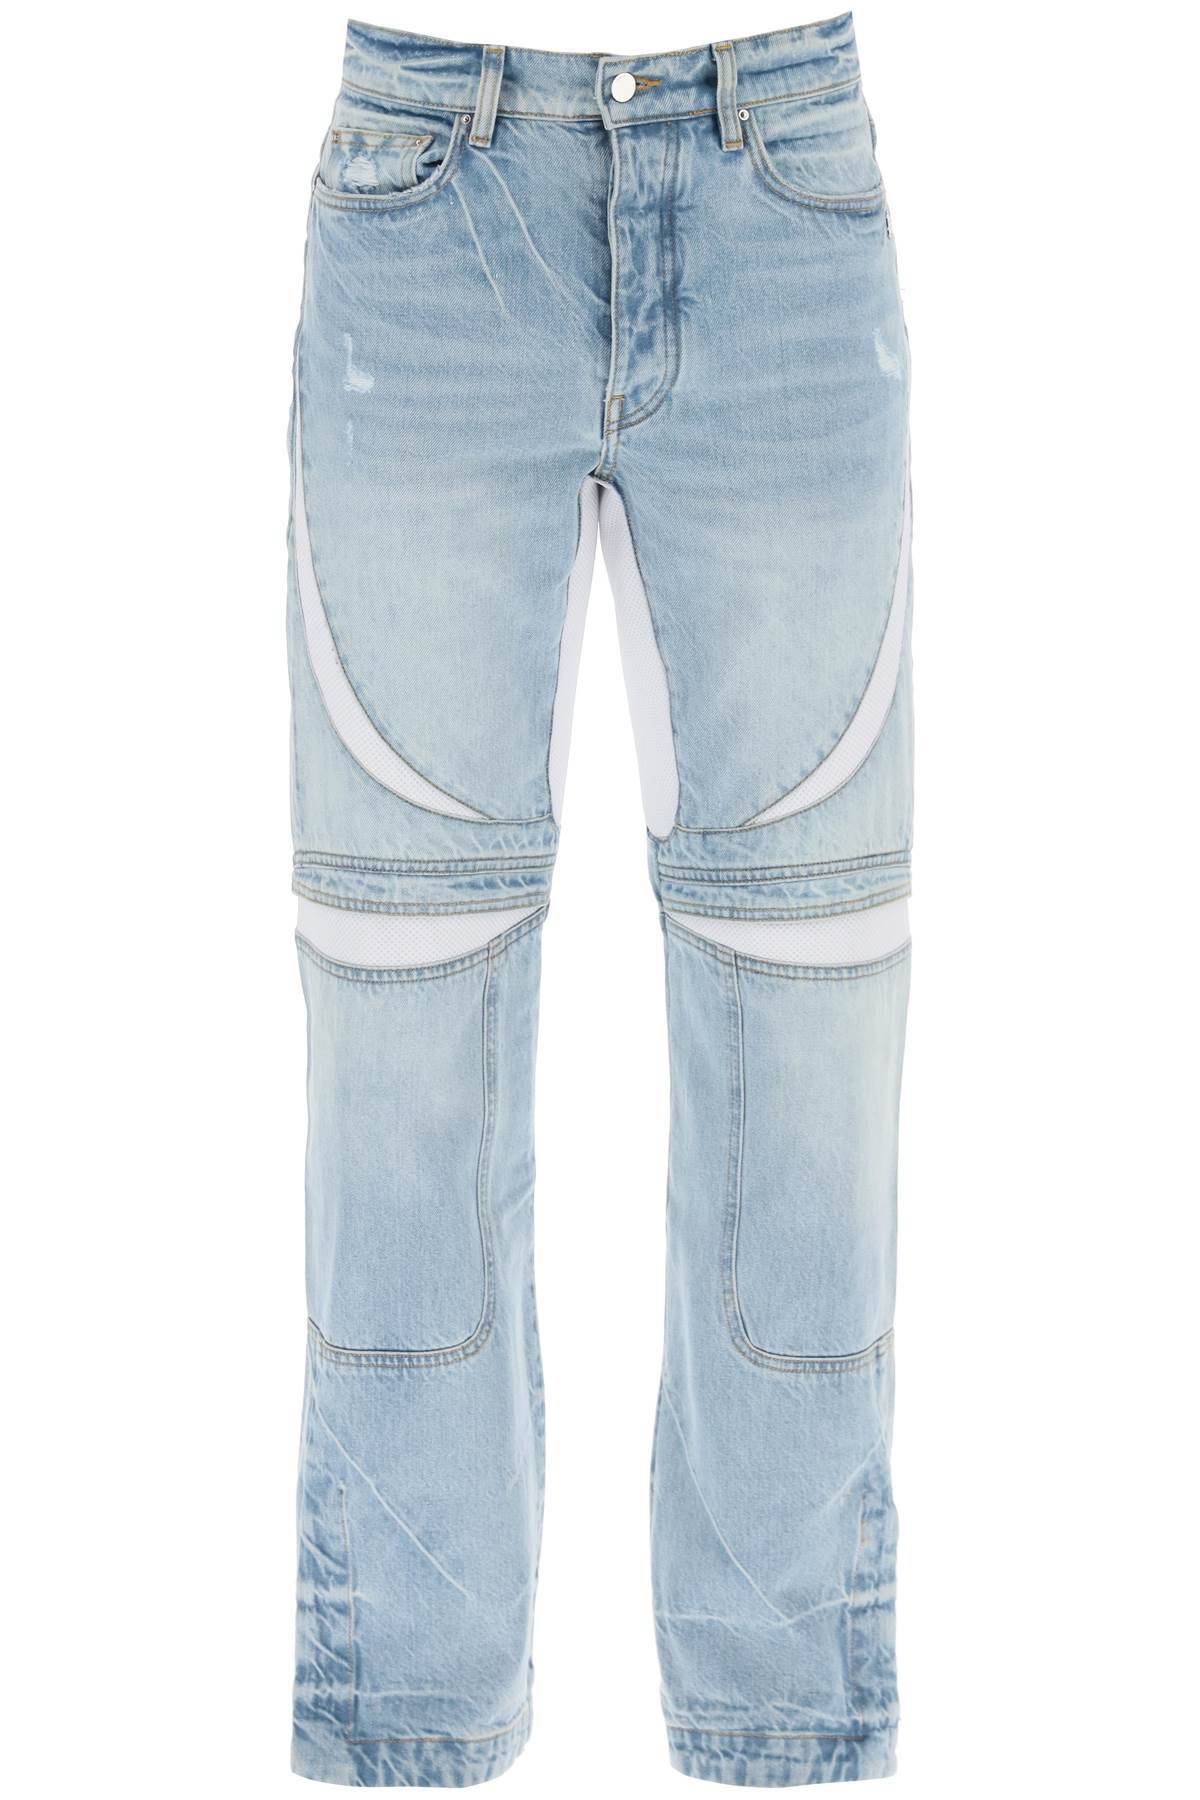 Amiri AMIRI mx-3 jeans with mesh inserts